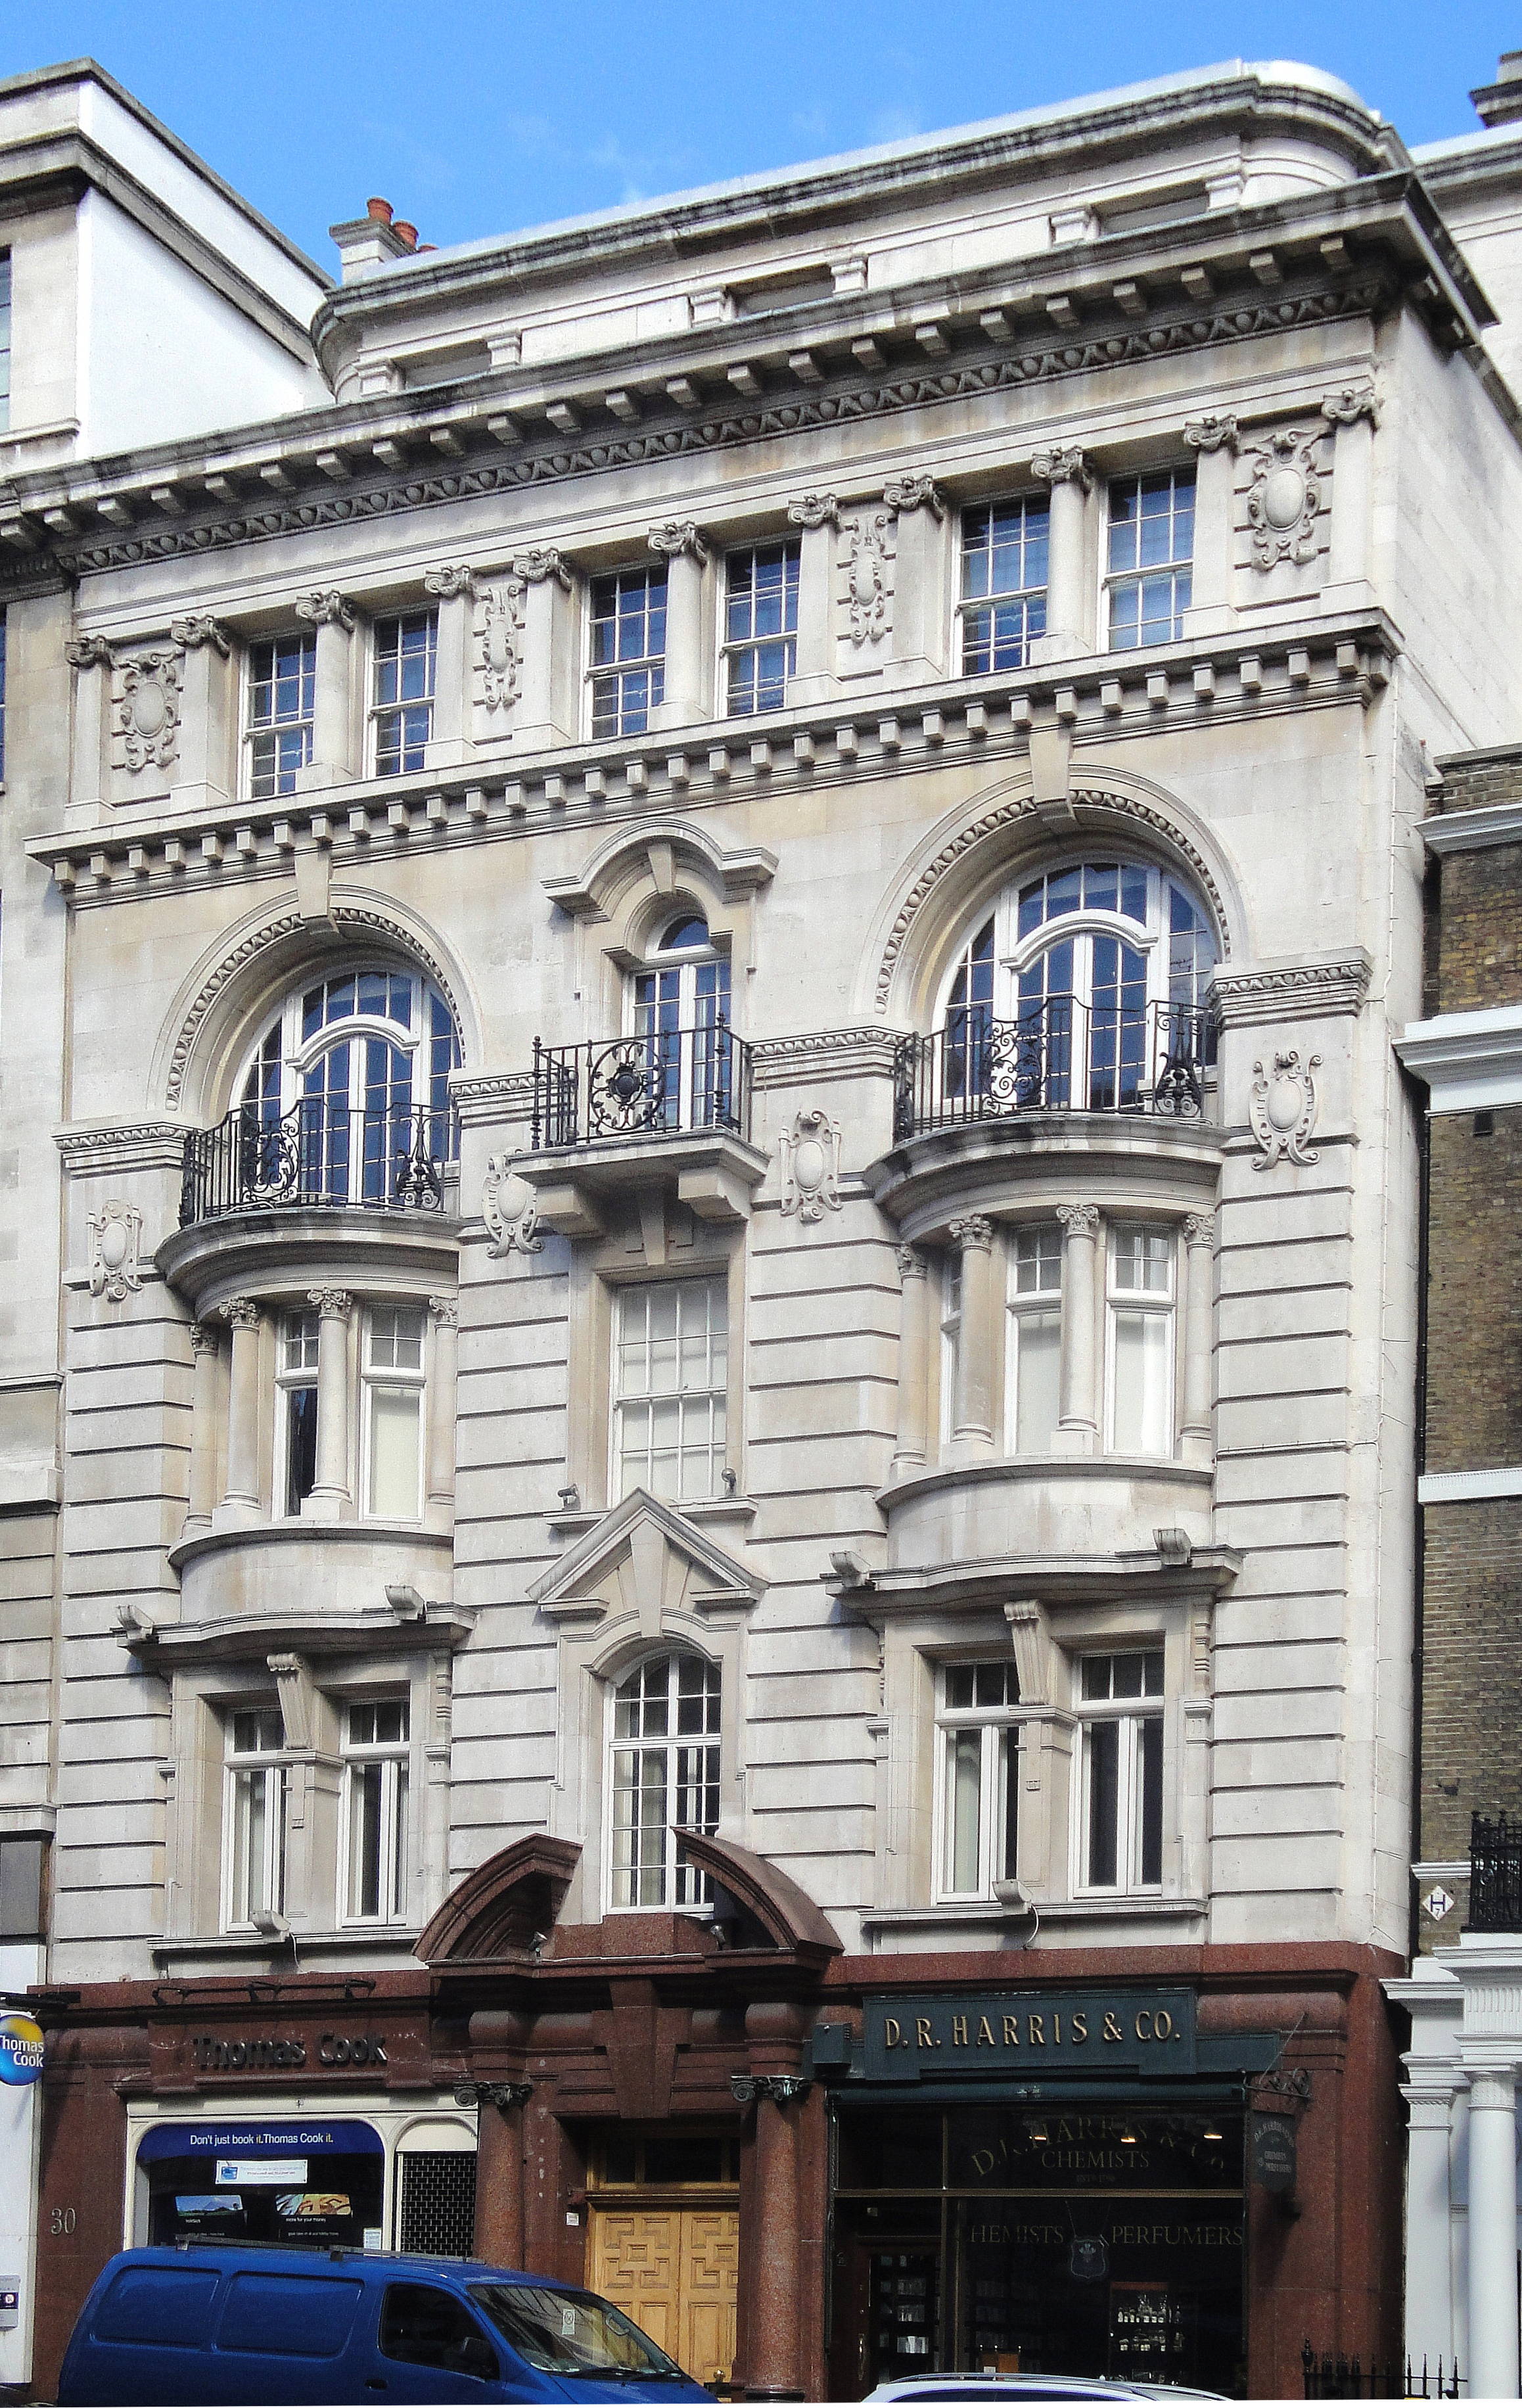 29-30 St. James Street (1904-5), London SW1, designed by Leslie W. Green